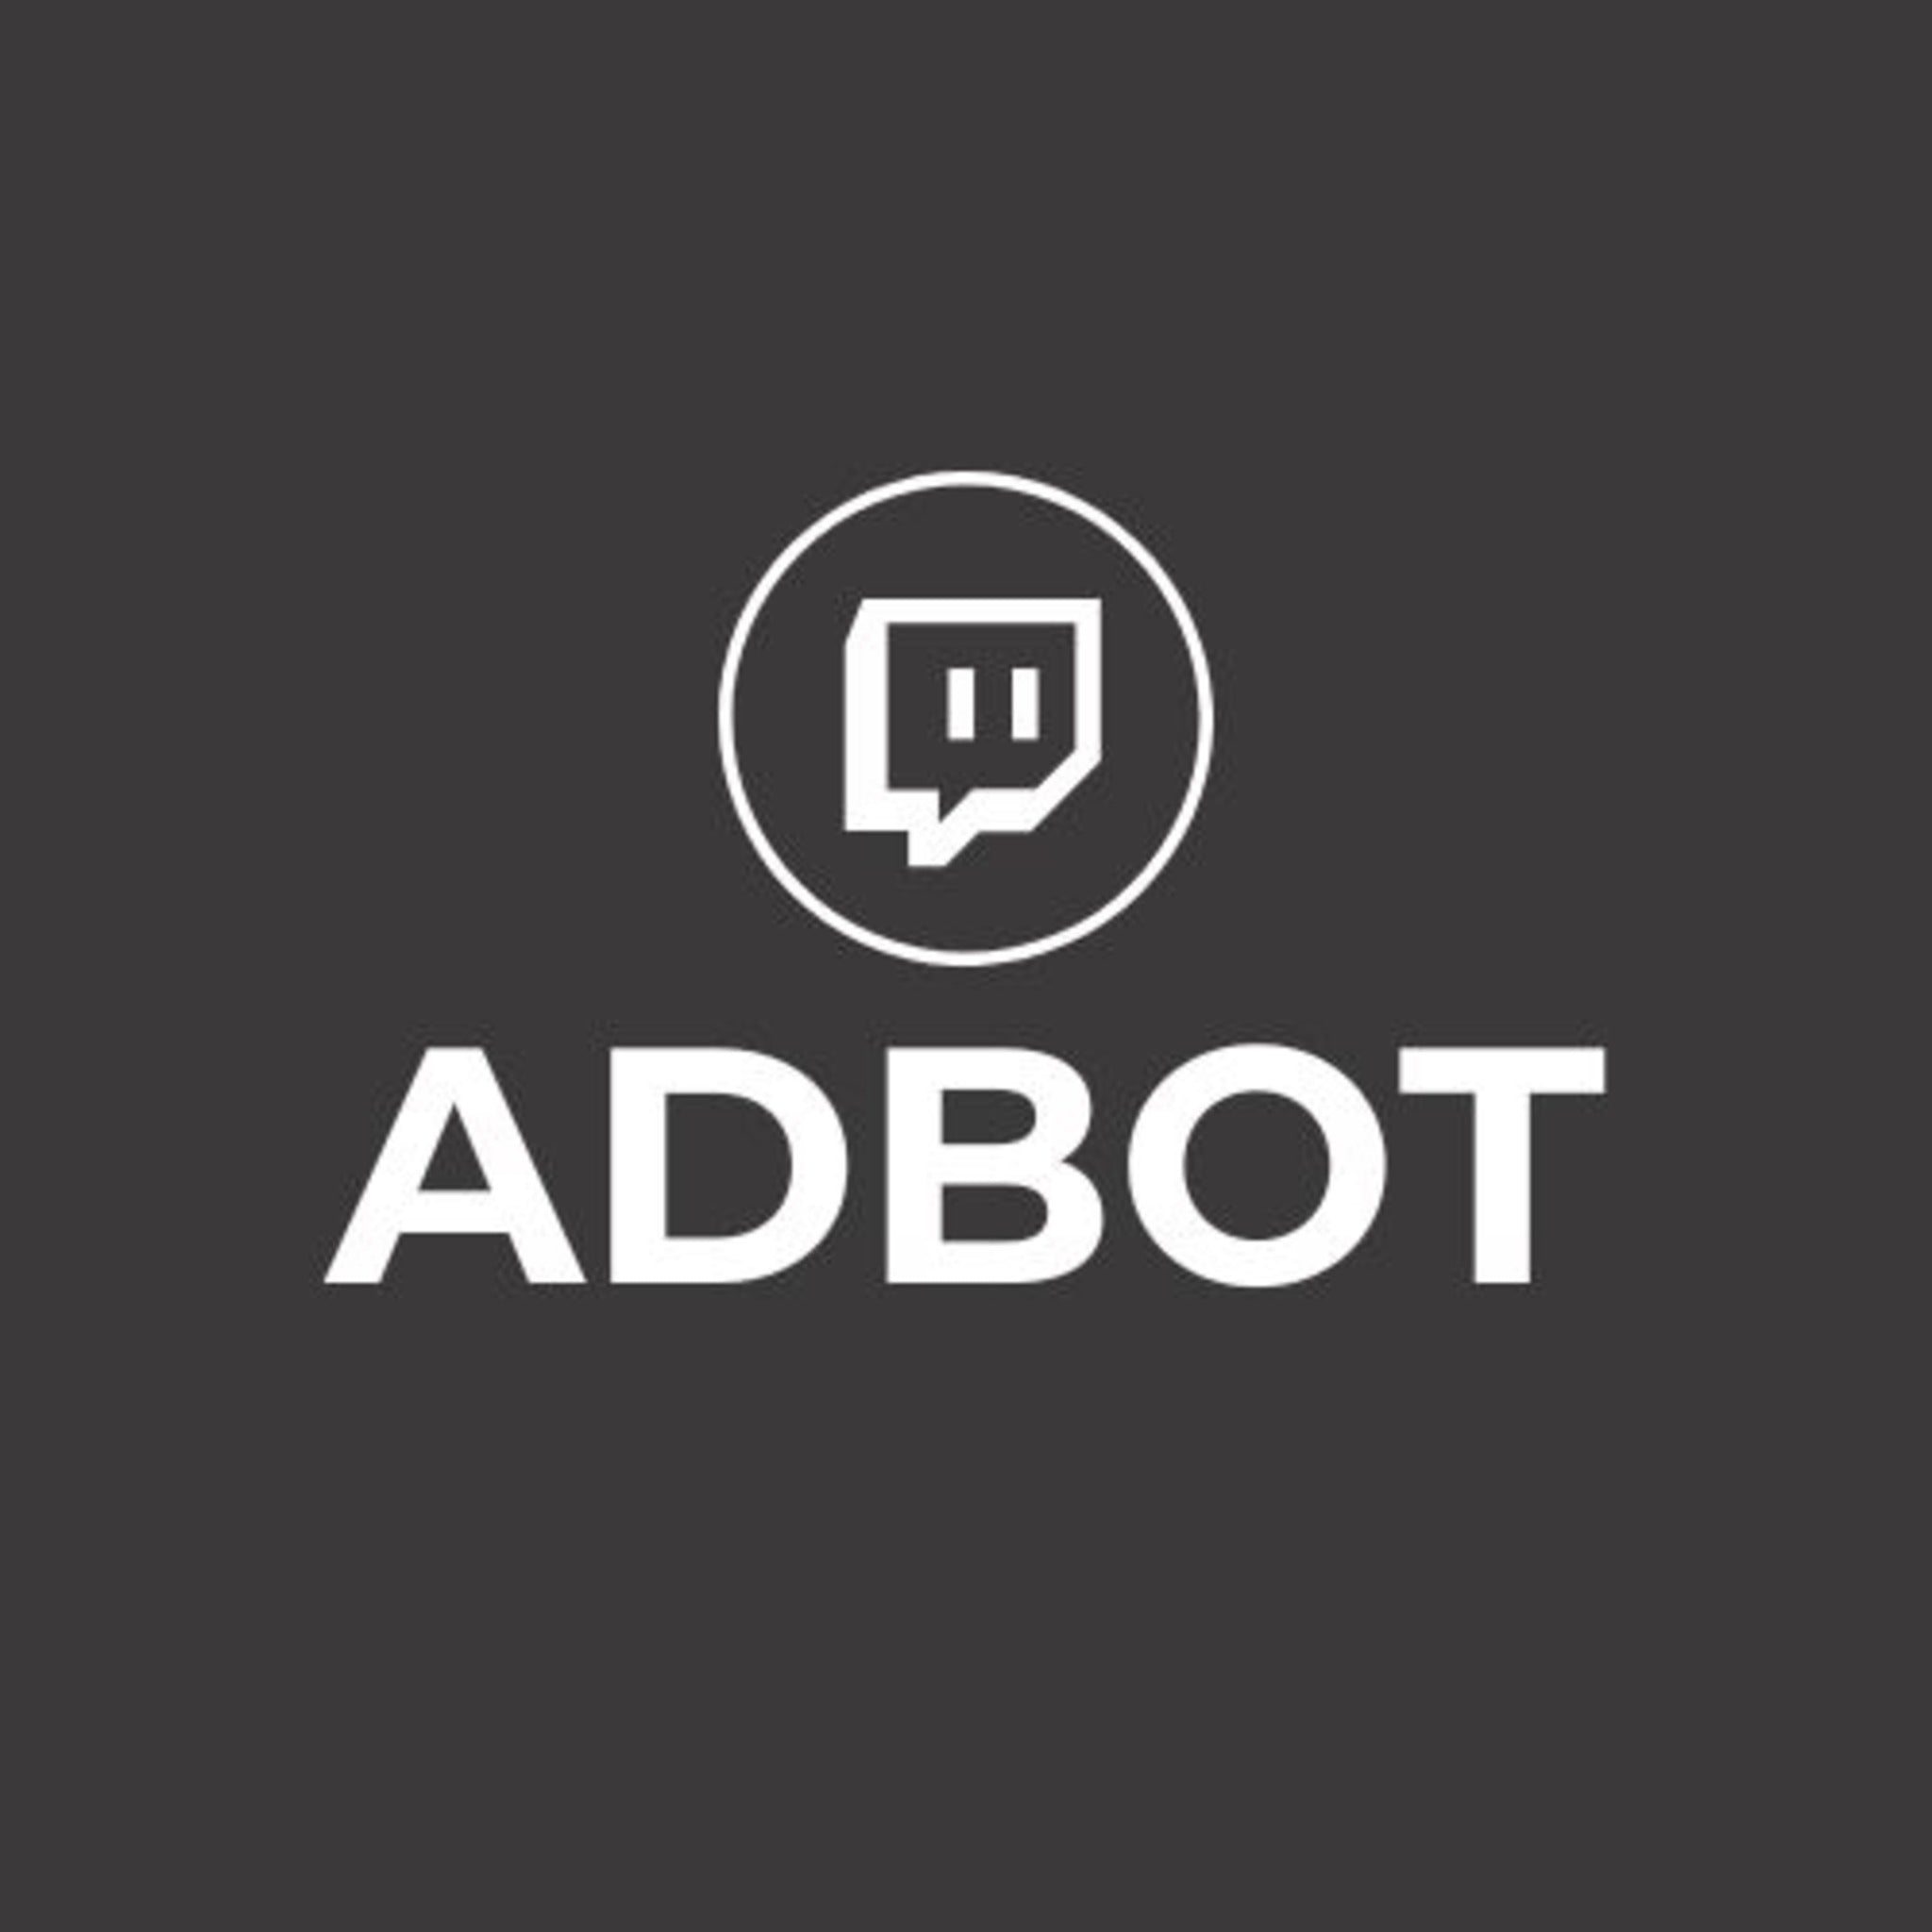 AdBot